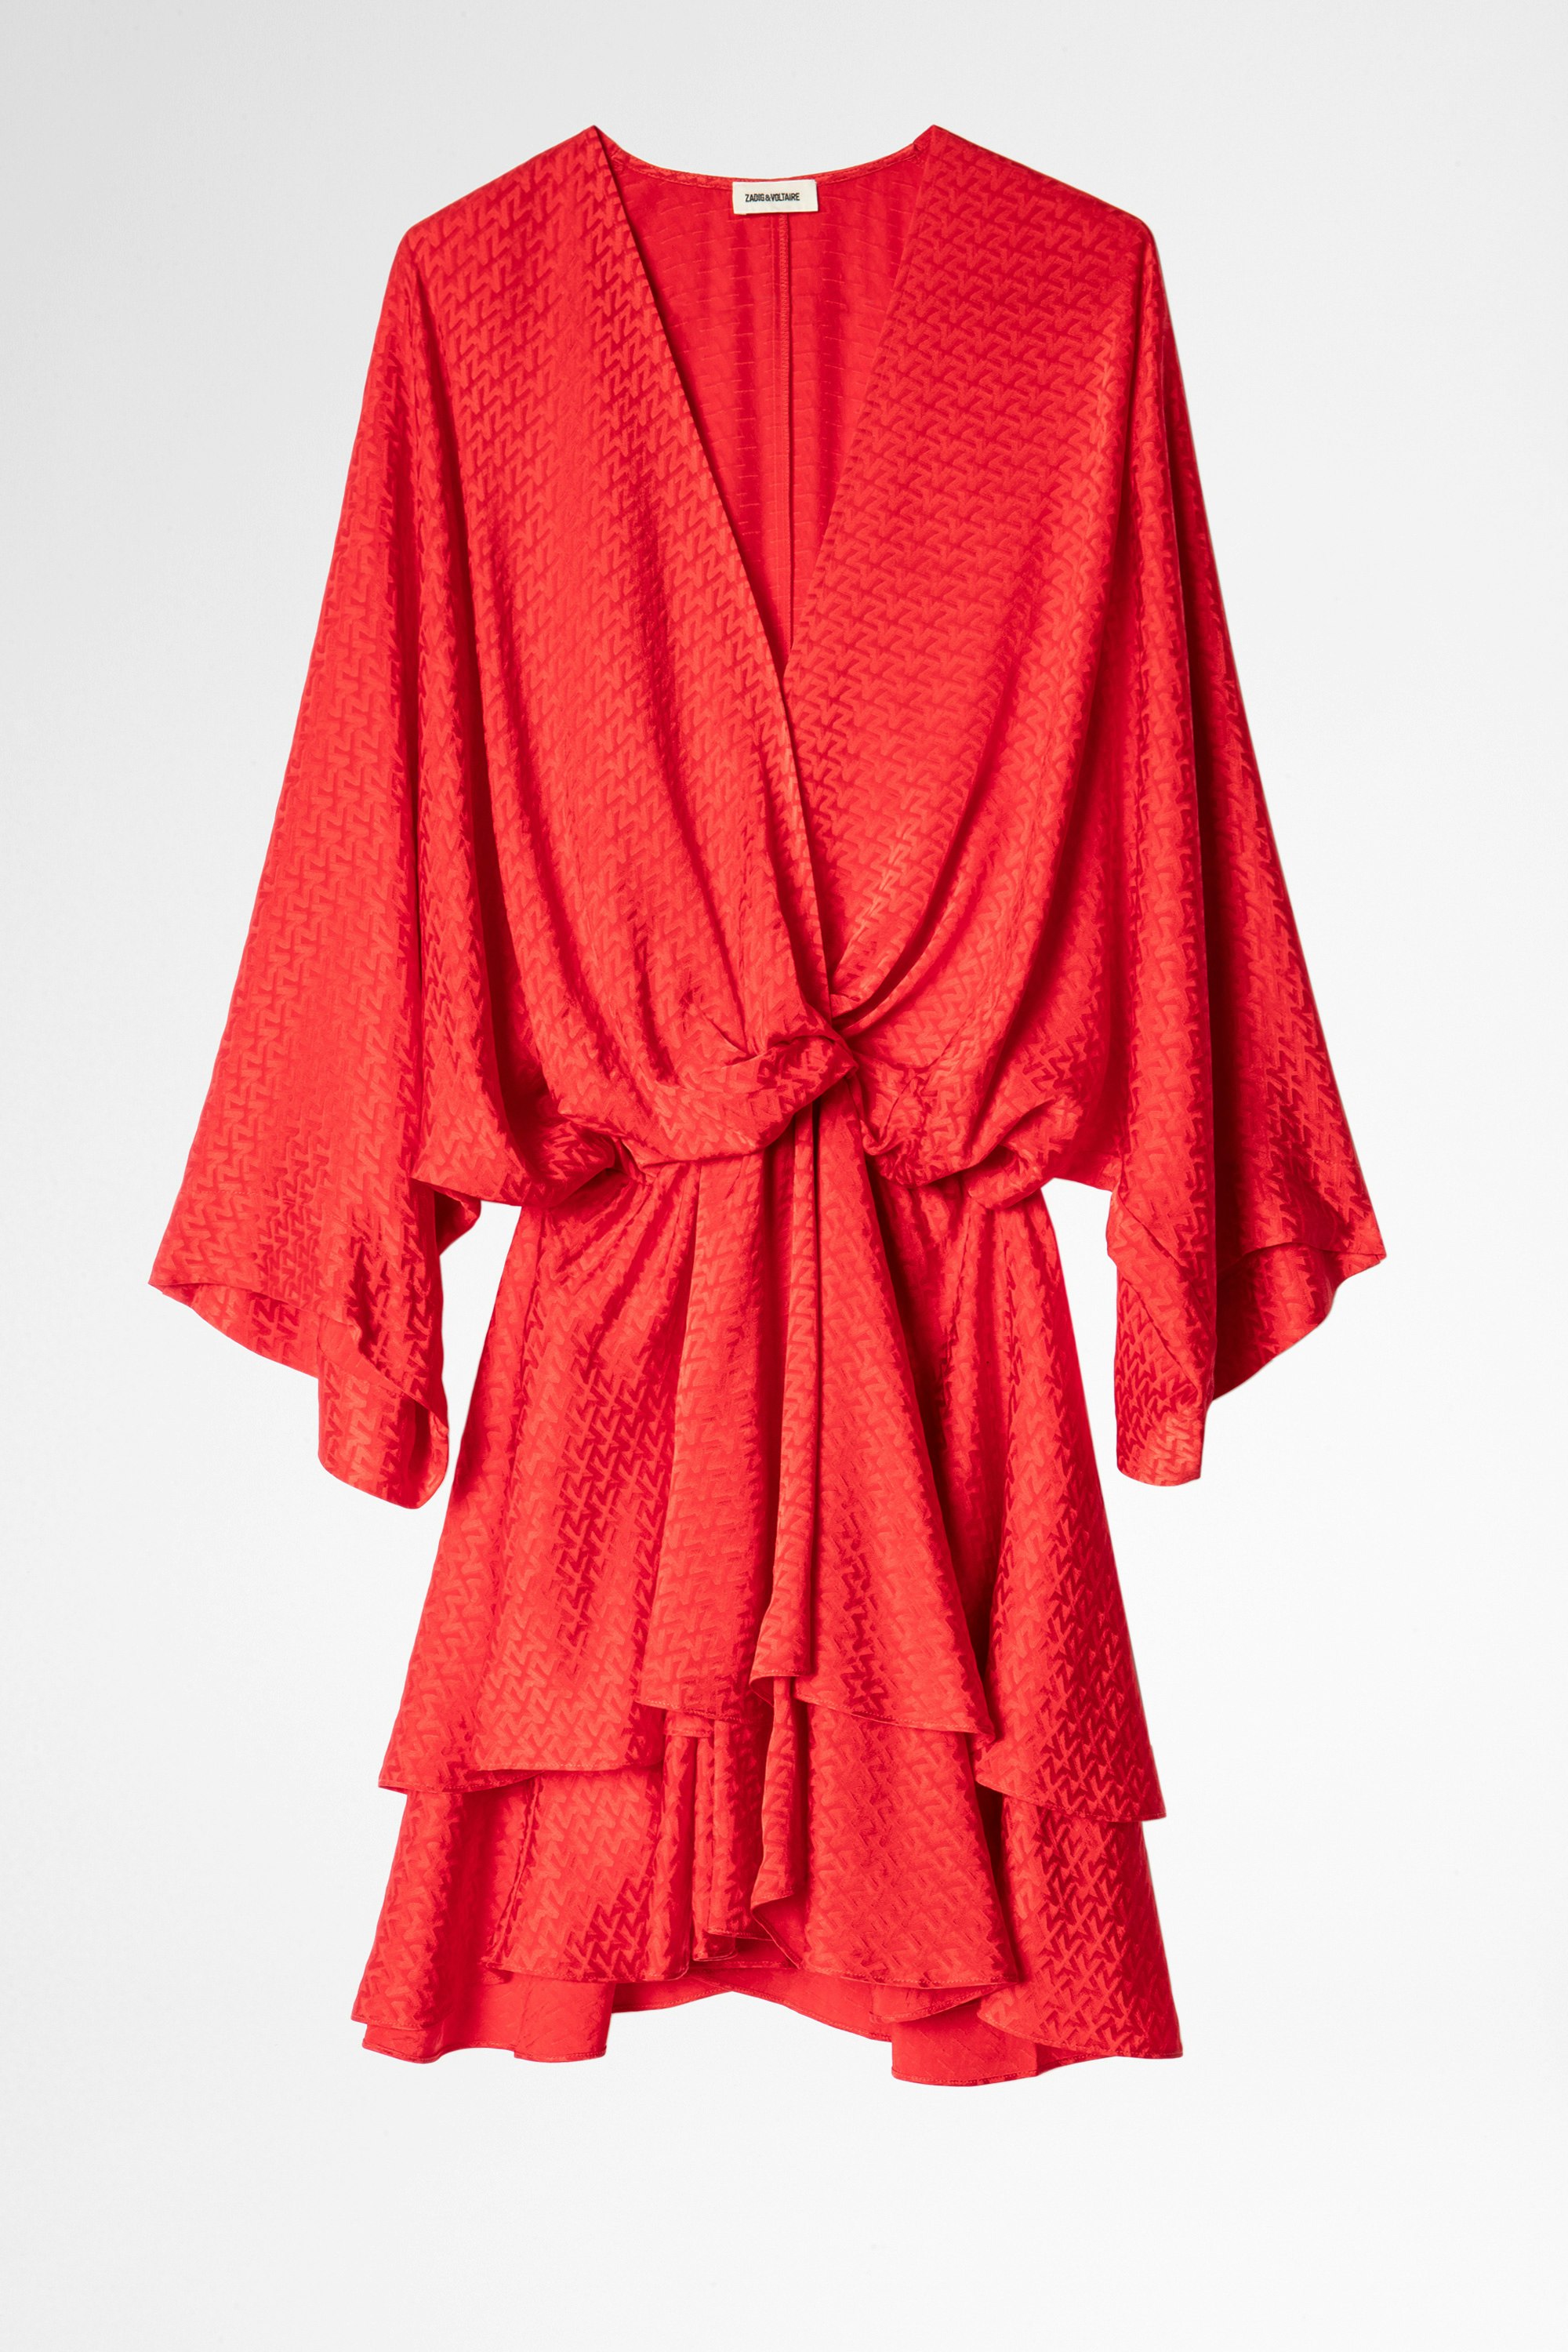 Vestido Seda Hailey Jac ZV Vestido rojo corto de jacquard de seda para mujer.